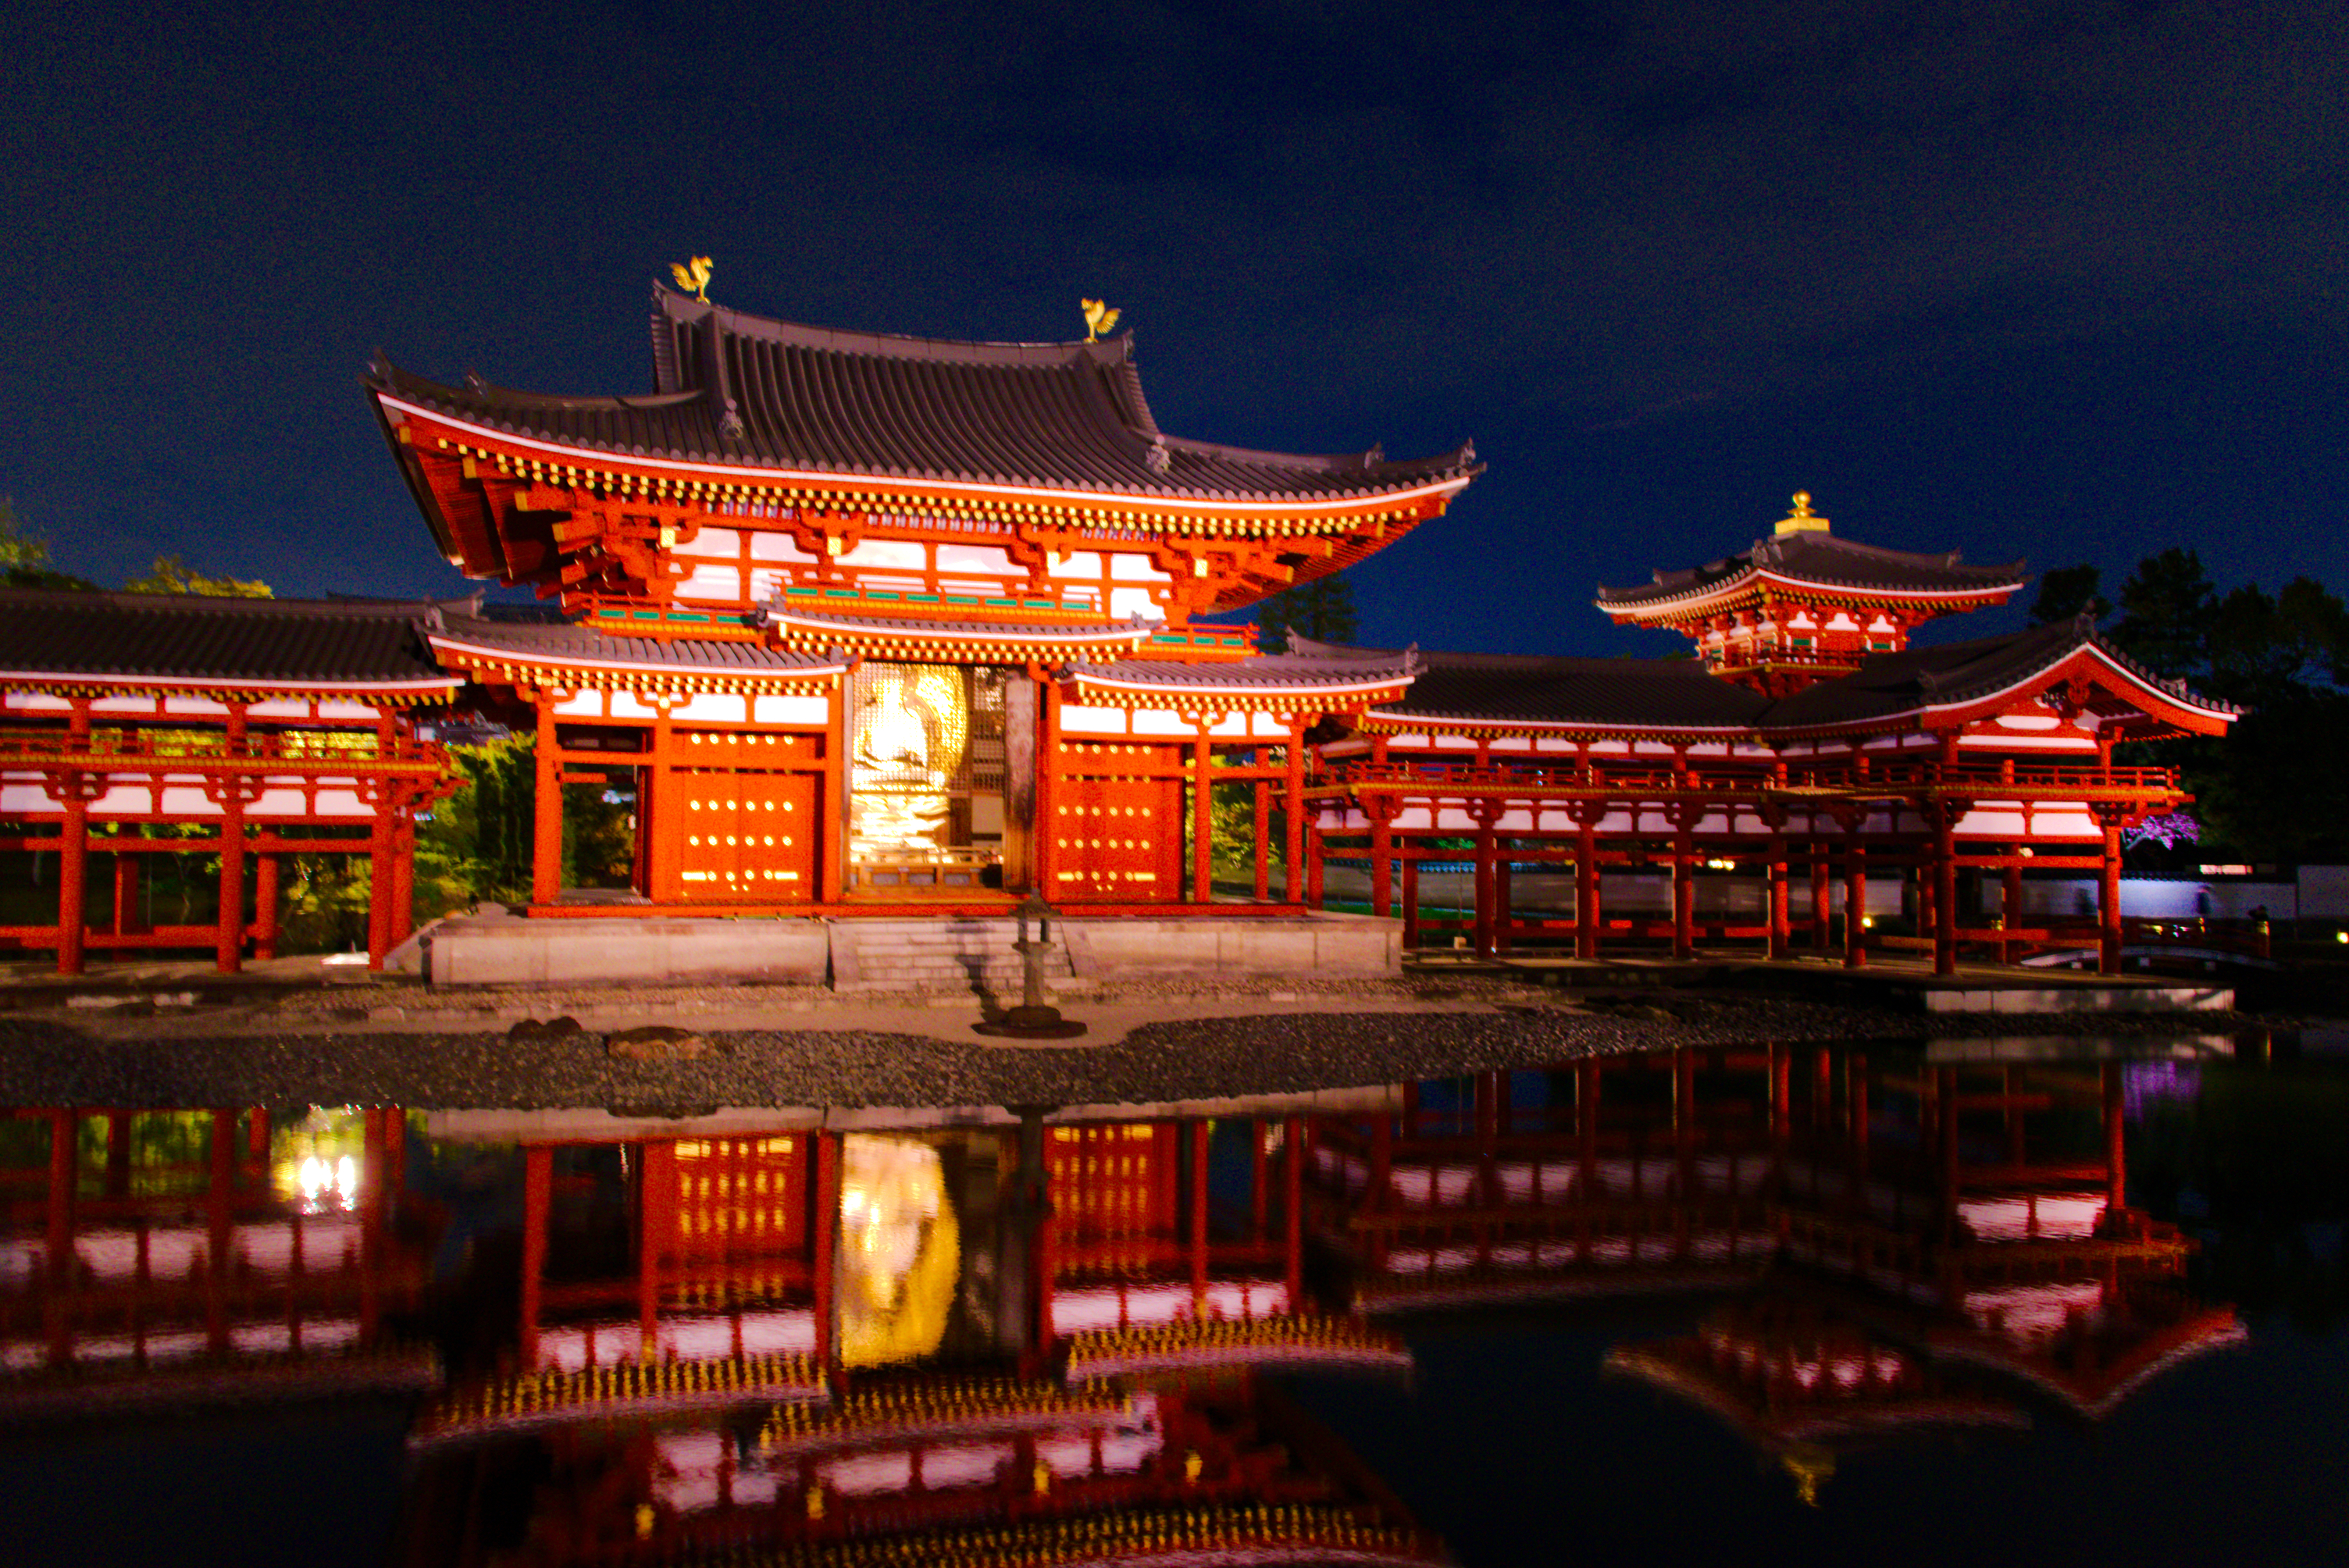 Amitaba Buddha in the Phoenix Hall of Byōdō-in Temple illuminated at Night